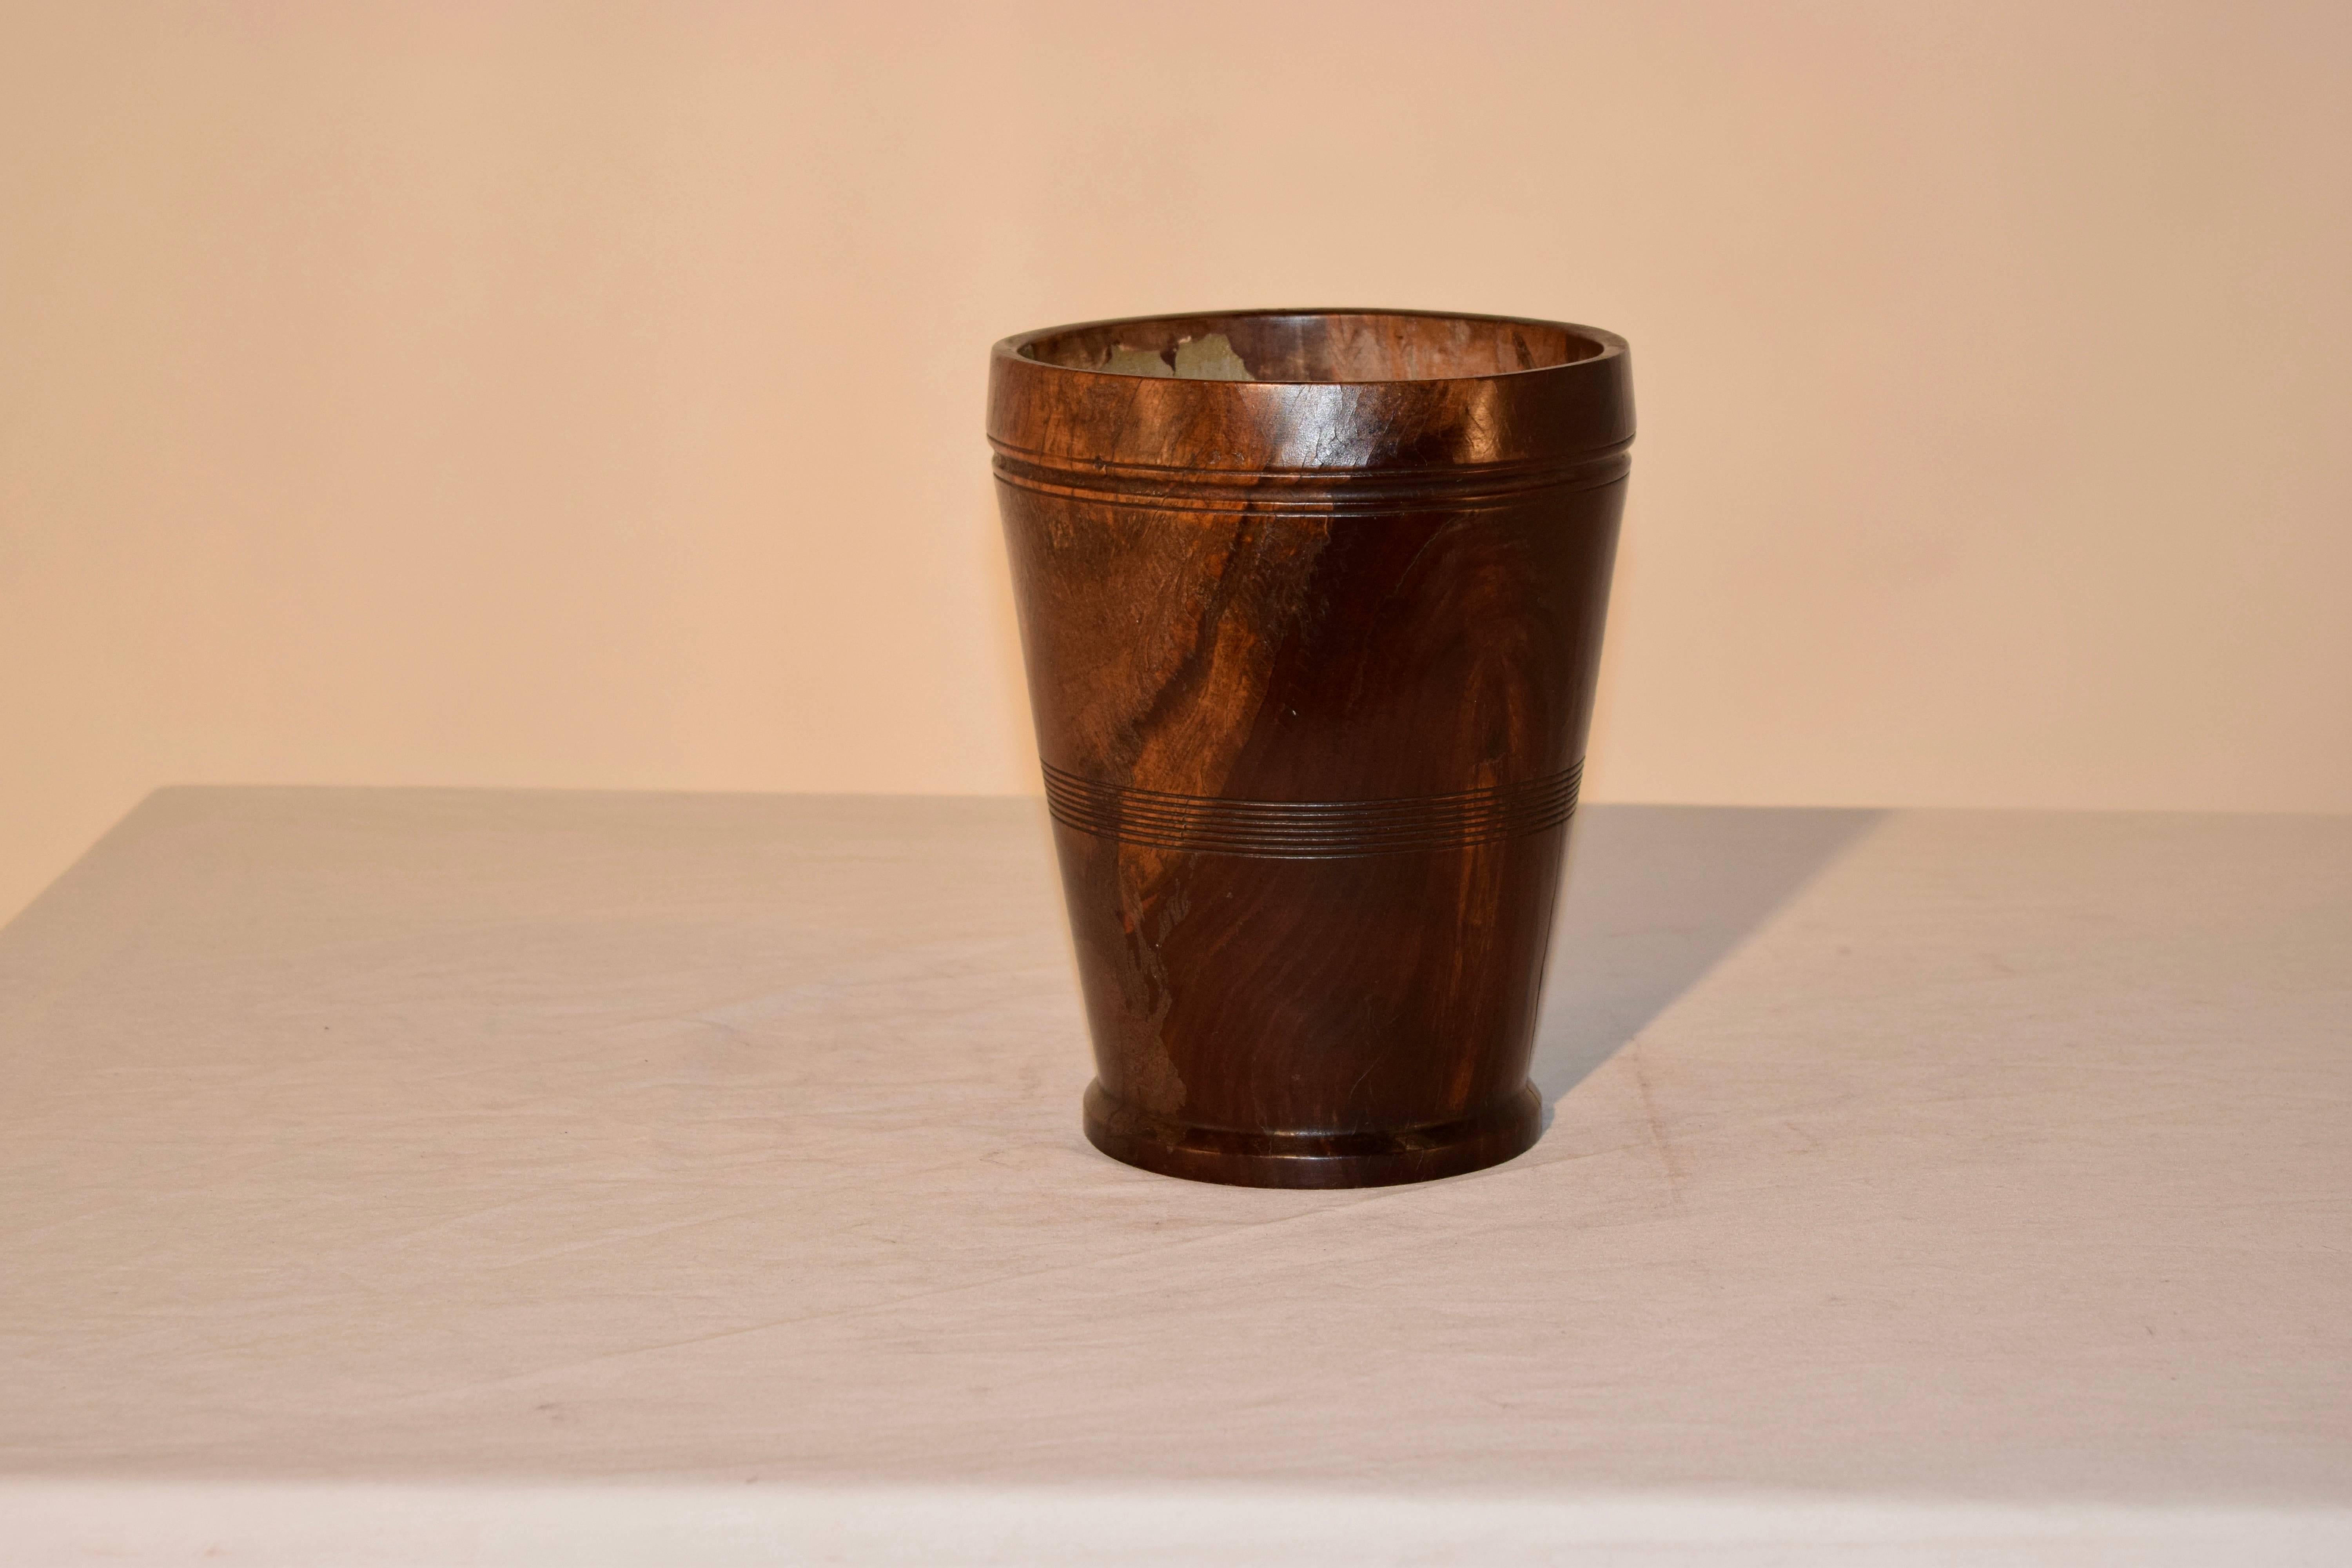 19th century, hand-turned wood vase made from lignum vitae.